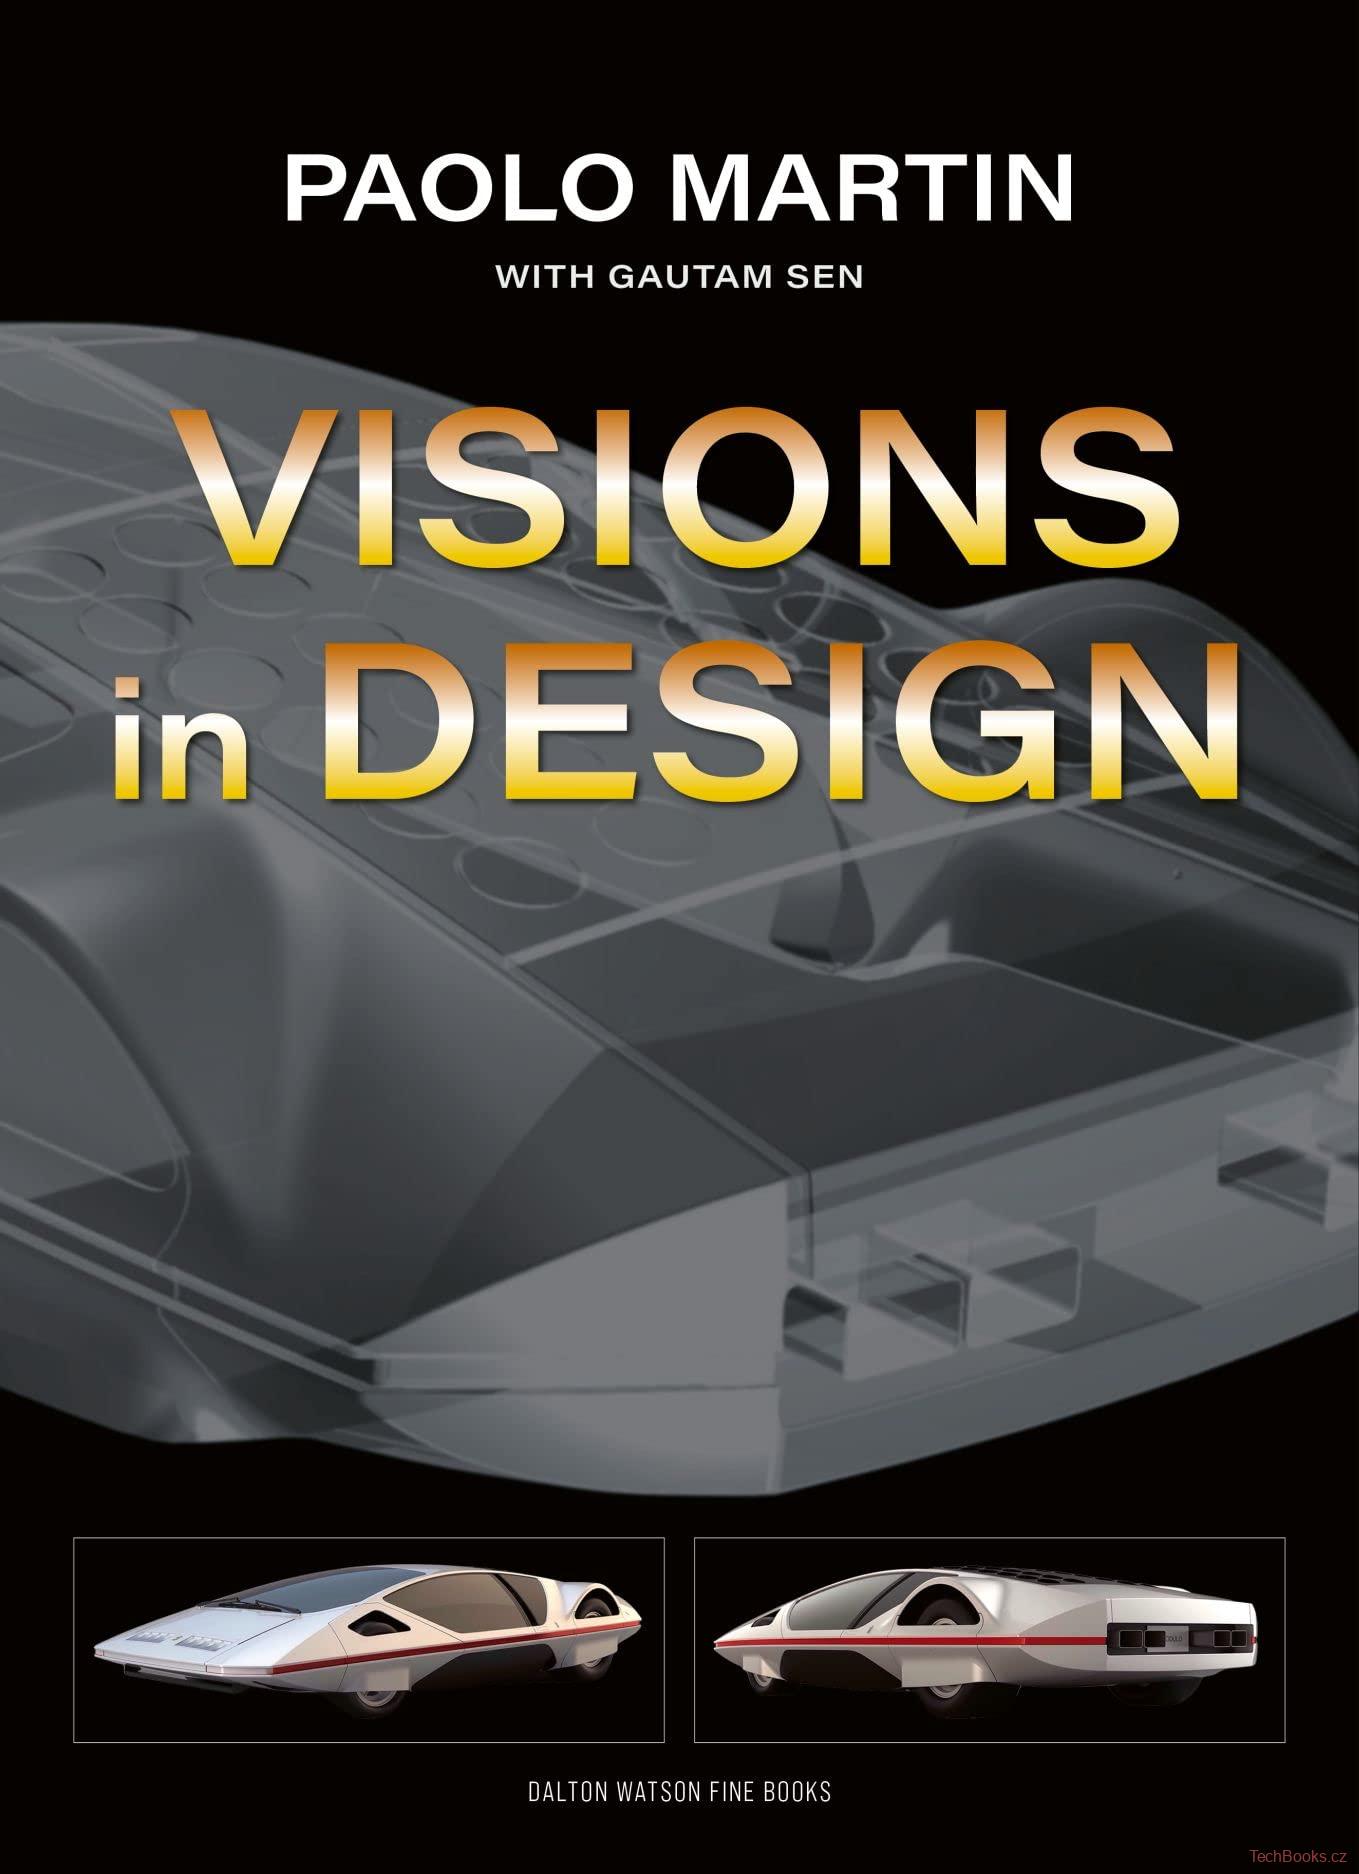 Paolo Martin - Visions in Design